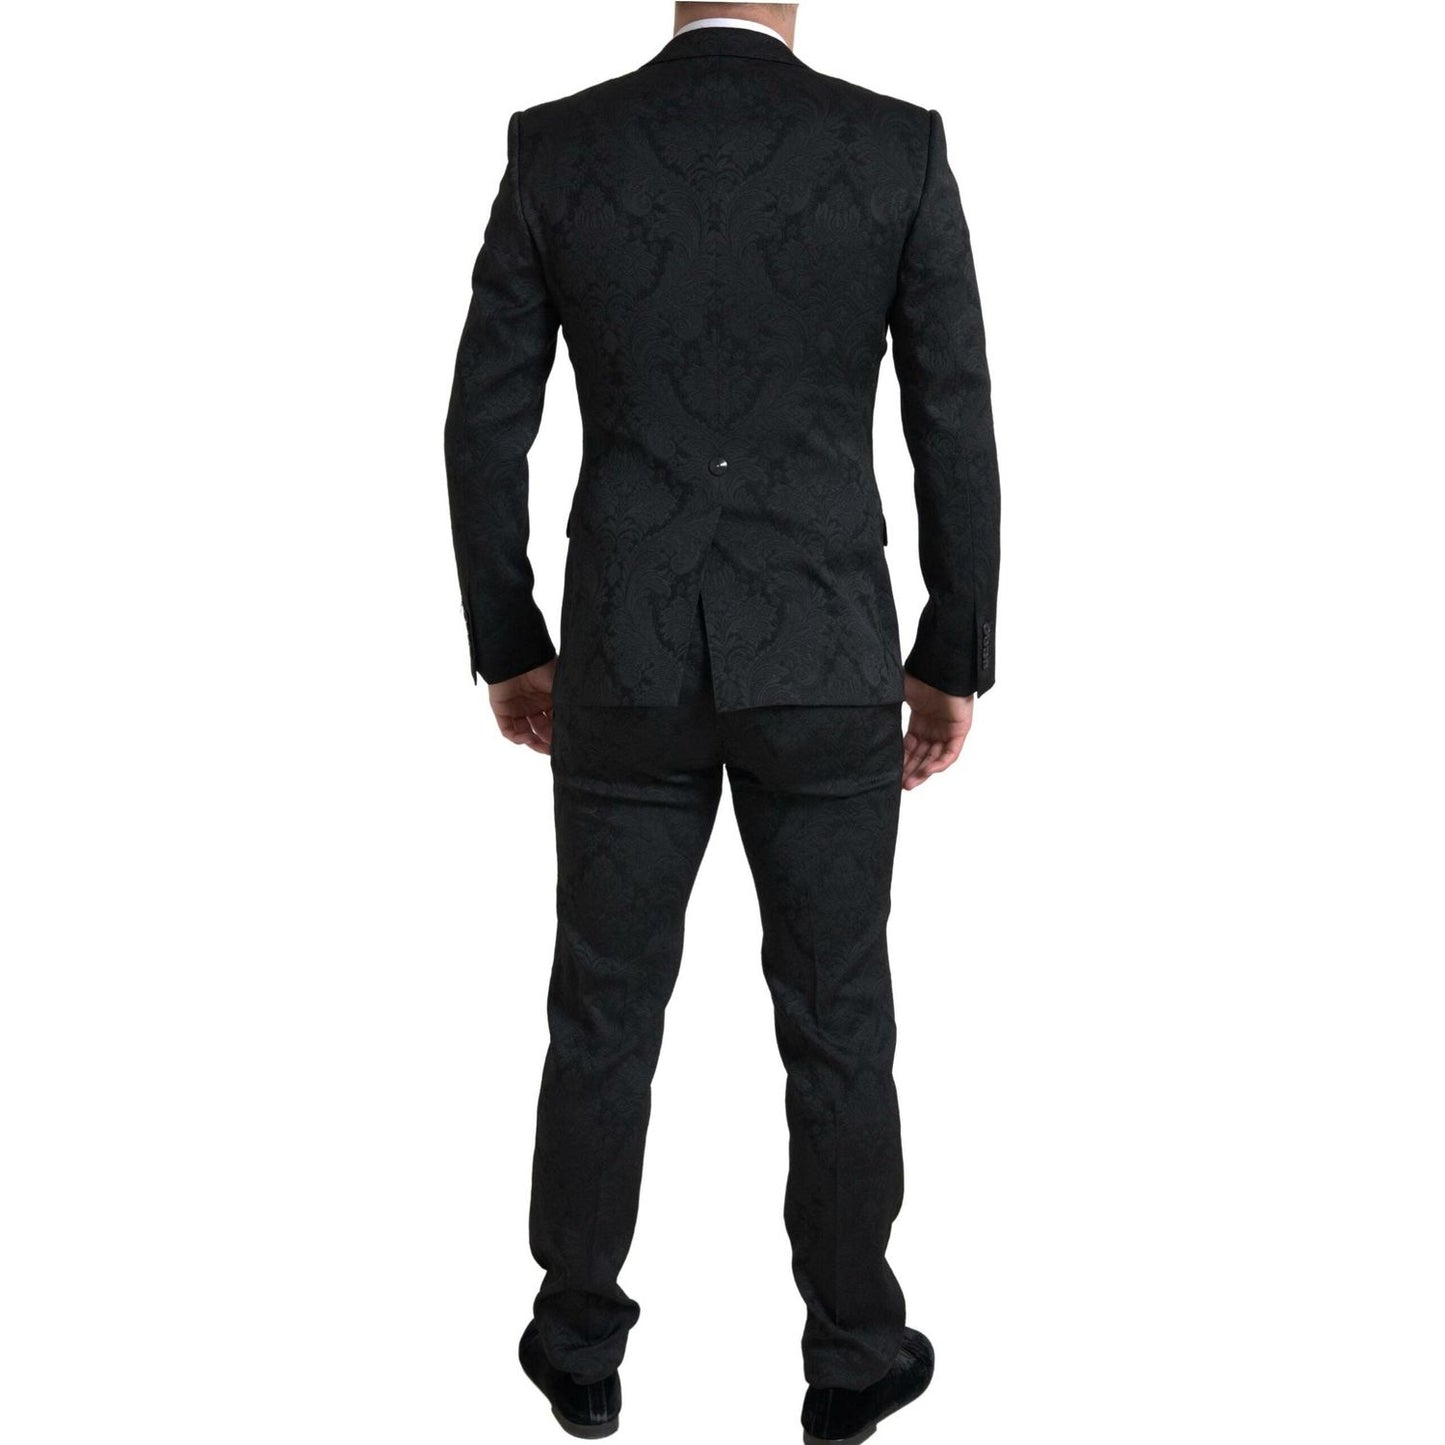 Dolce & Gabbana Elegant Slim Fit Black Martini Suit black-2-piece-single-breasted-martini-suit-4